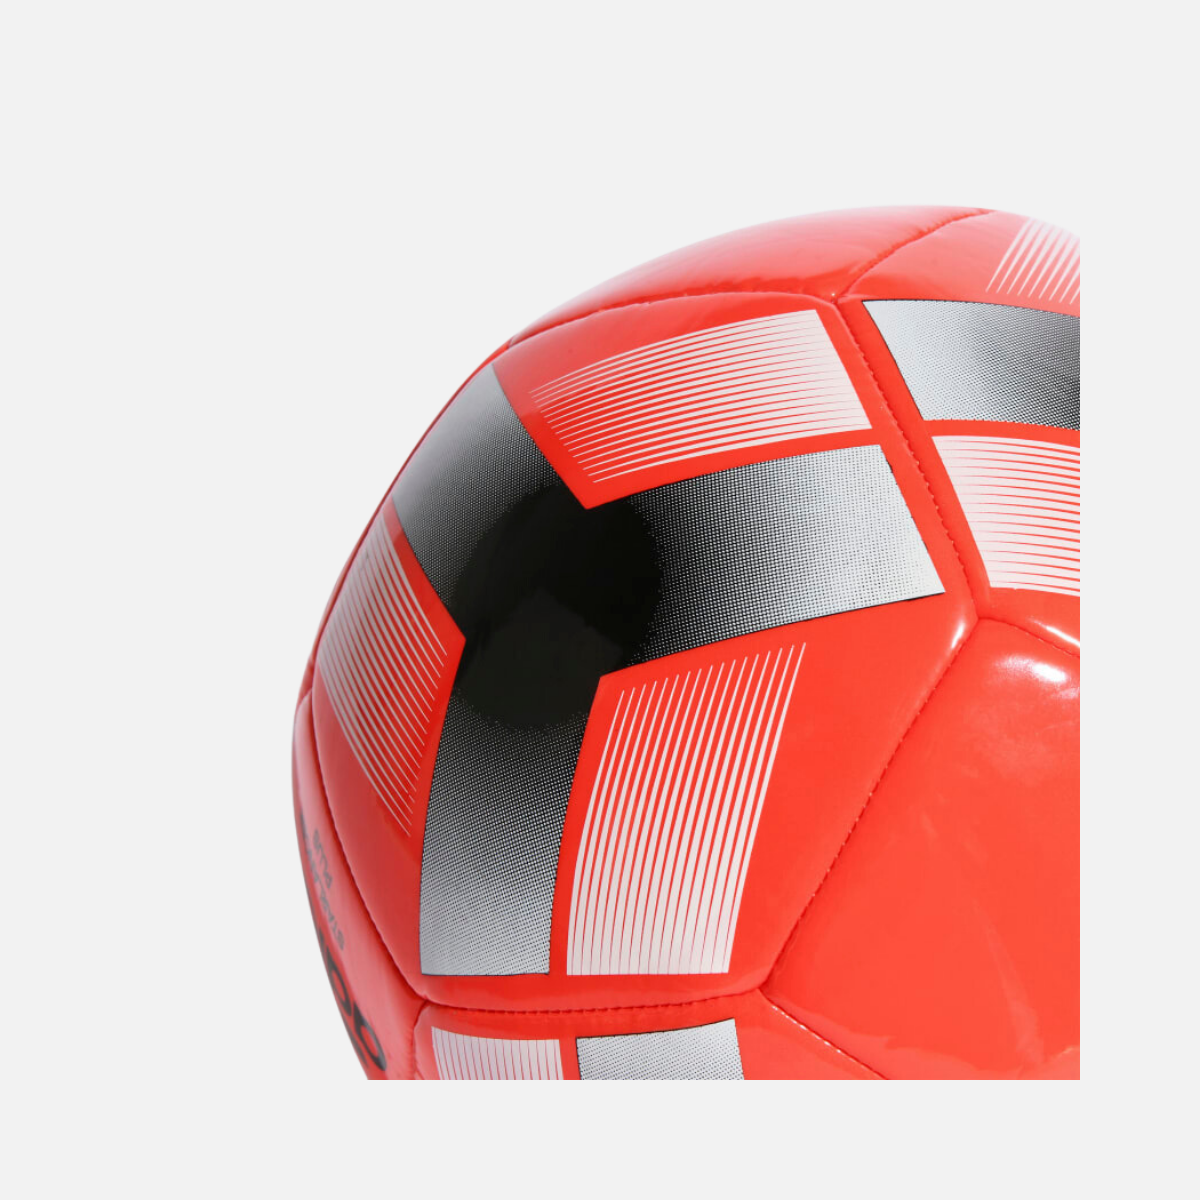 Adidas Starlancer Plus Football -Solar Red/White/Black